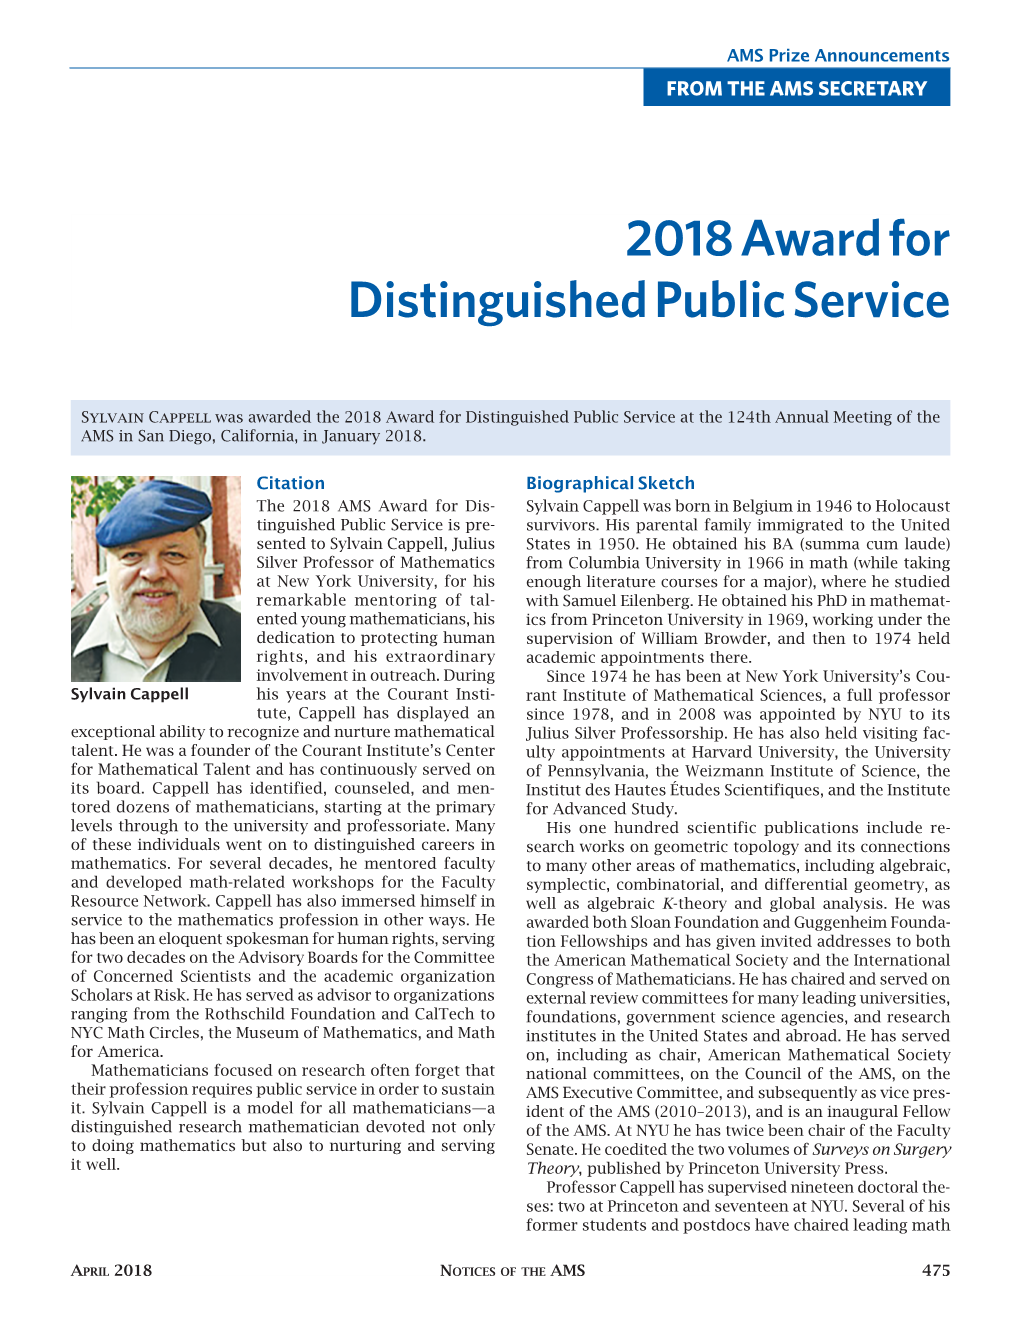 2018 Award for Distinguished Public Service